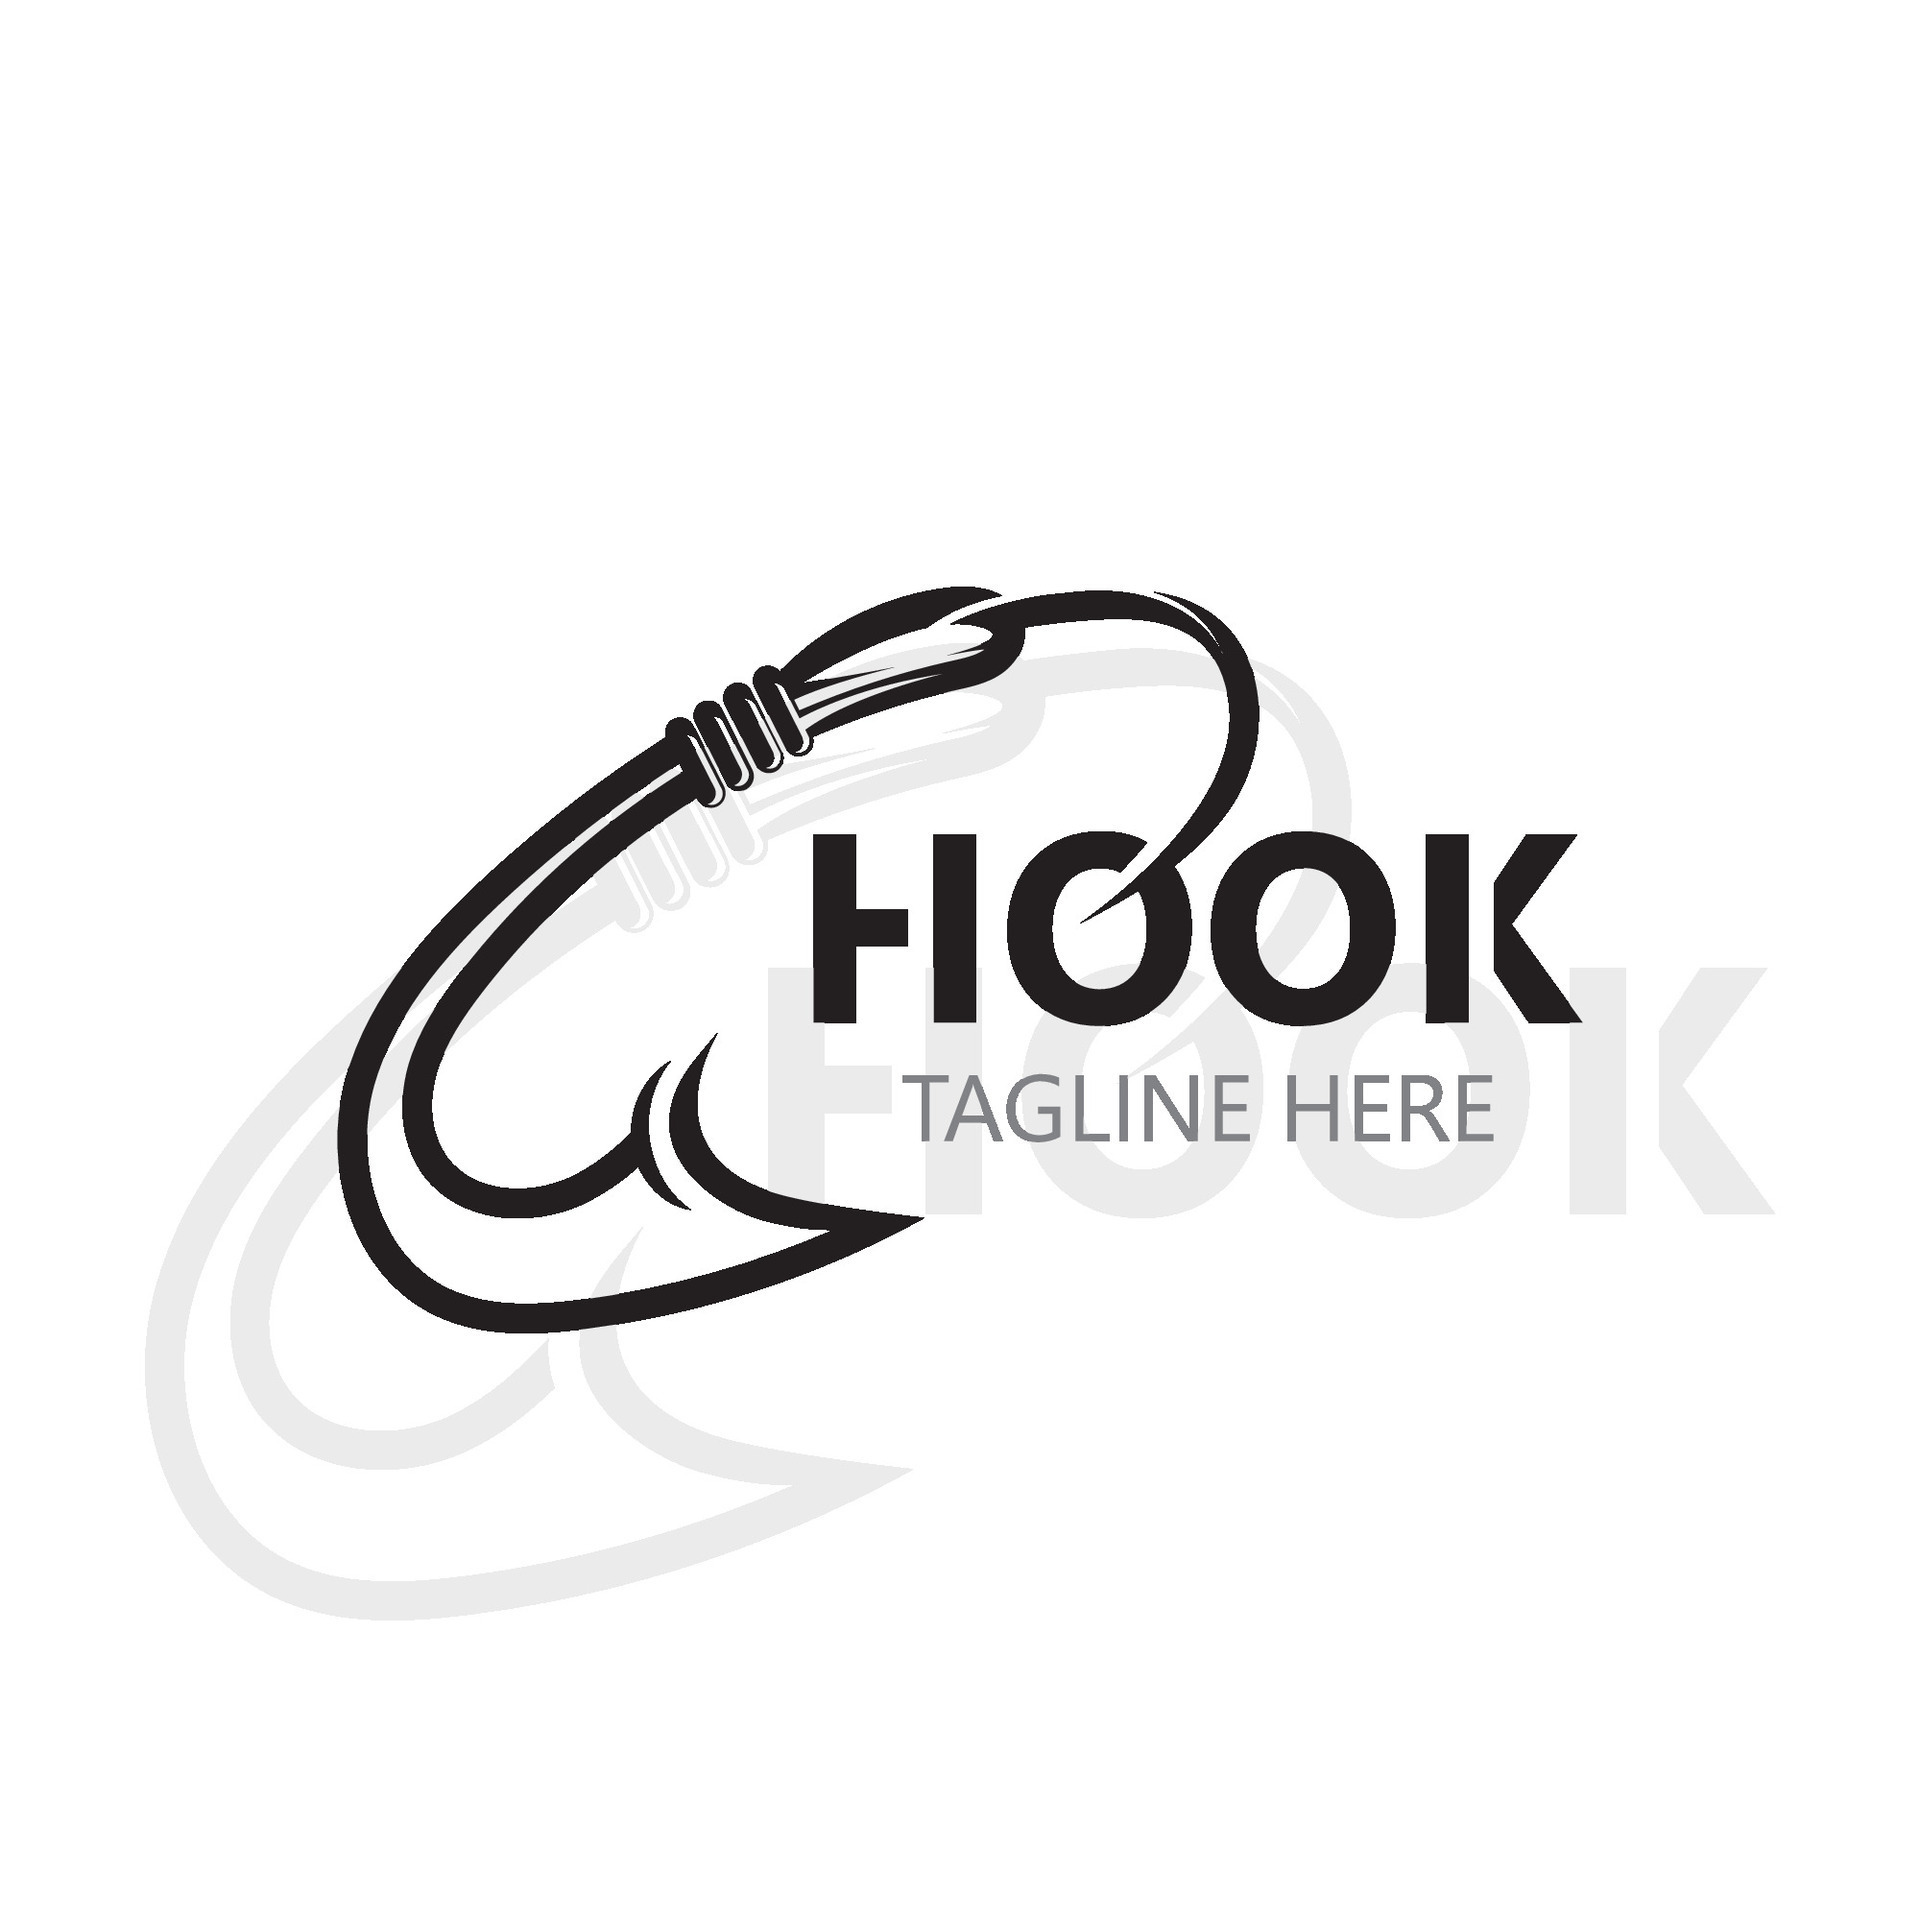 Hook Fishing logo simple and modern vintage rustic vector design